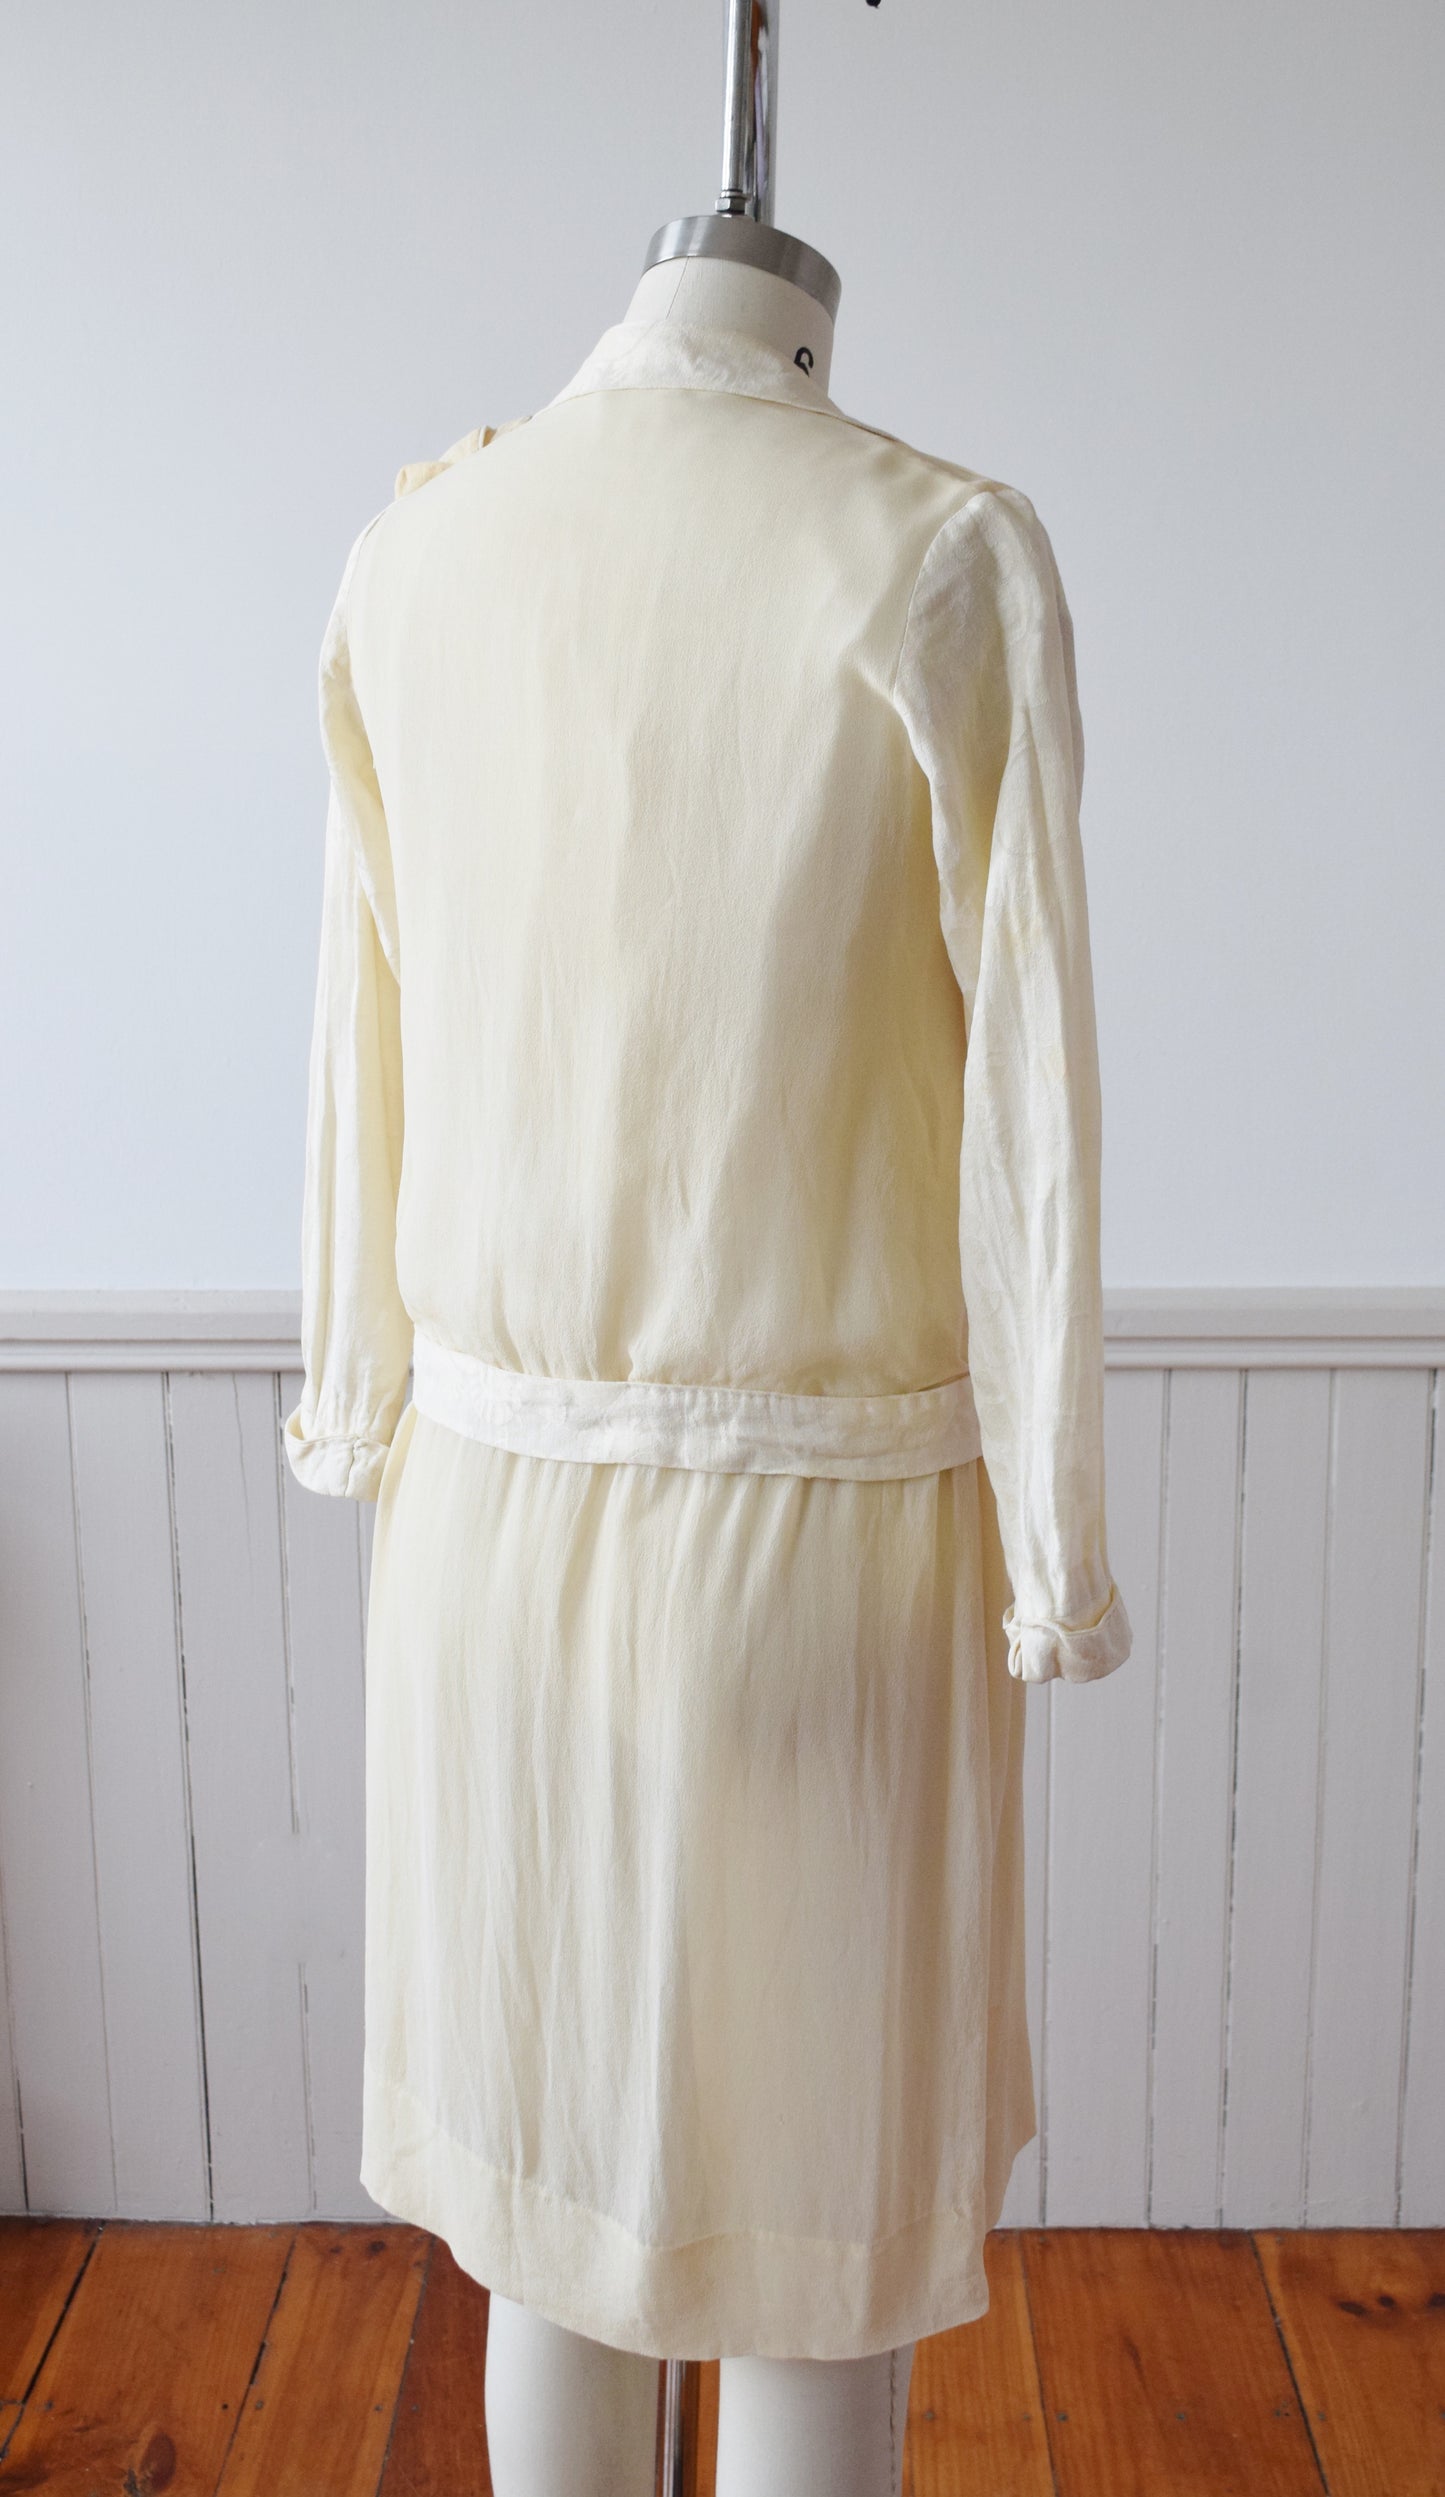 1920s Adolescent’s (or V. Petite Adult) Mixed Silks Dress